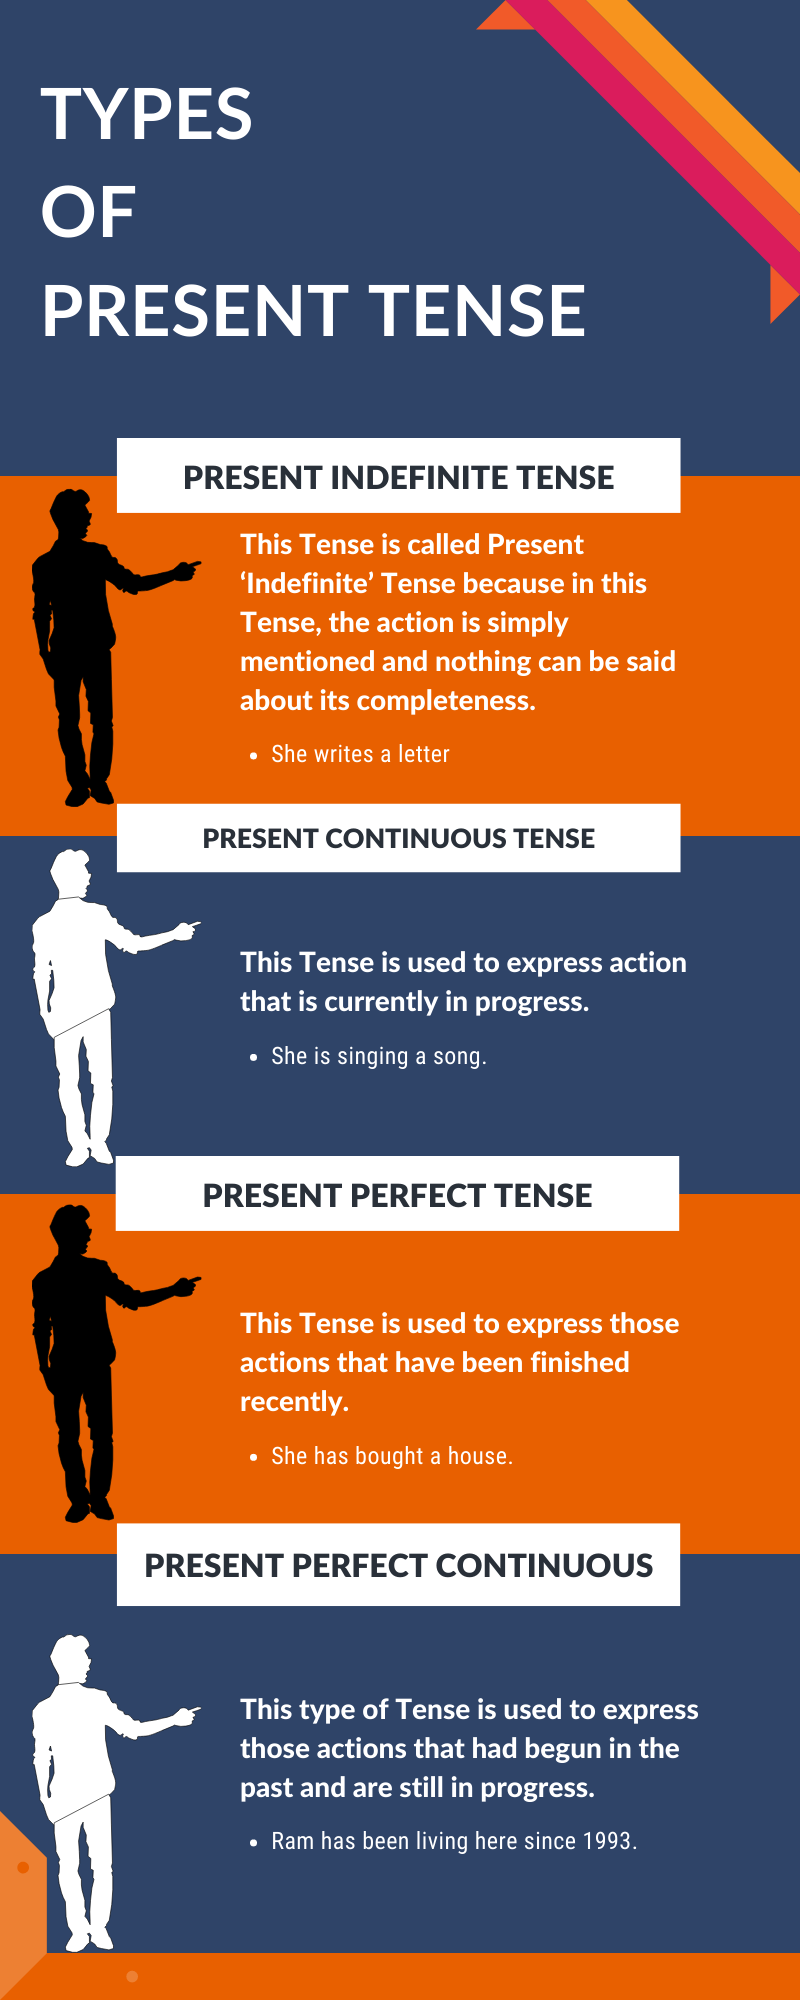 Types of Present Tense